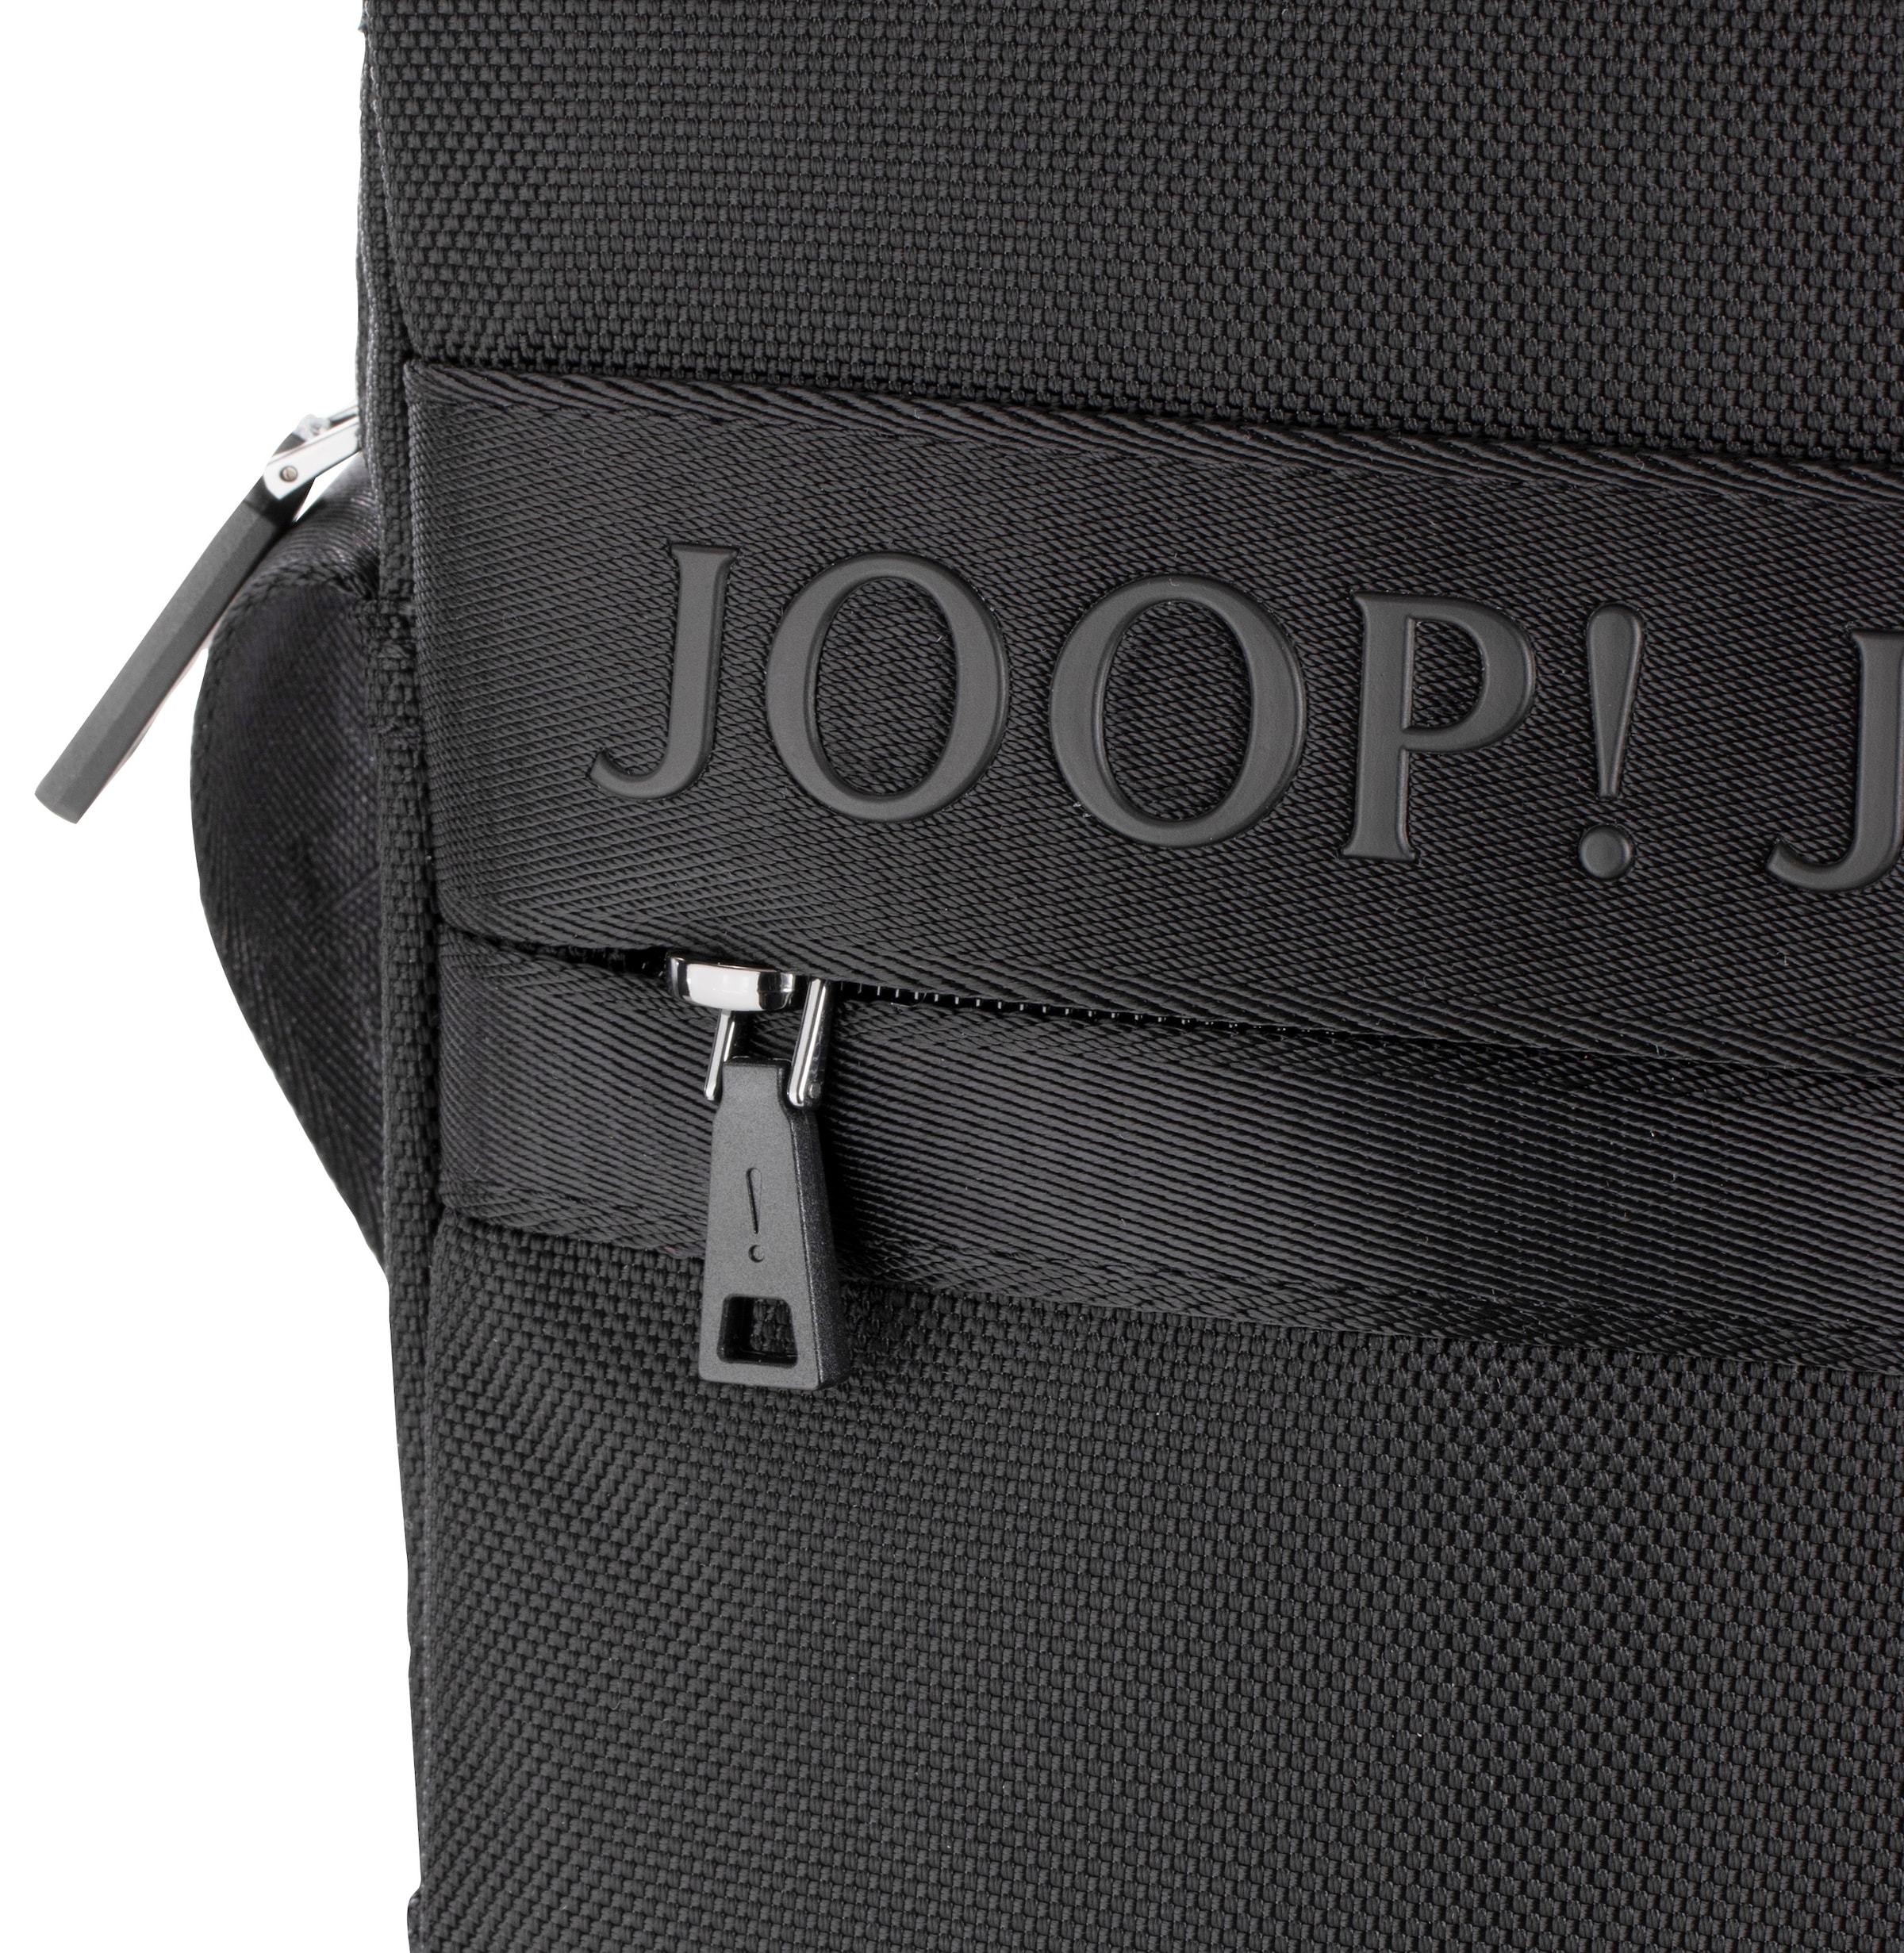 Joop Jeans Umhängetasche »modica milo shoulderbag xsvz«, mit Reißverschluss-Rückfach